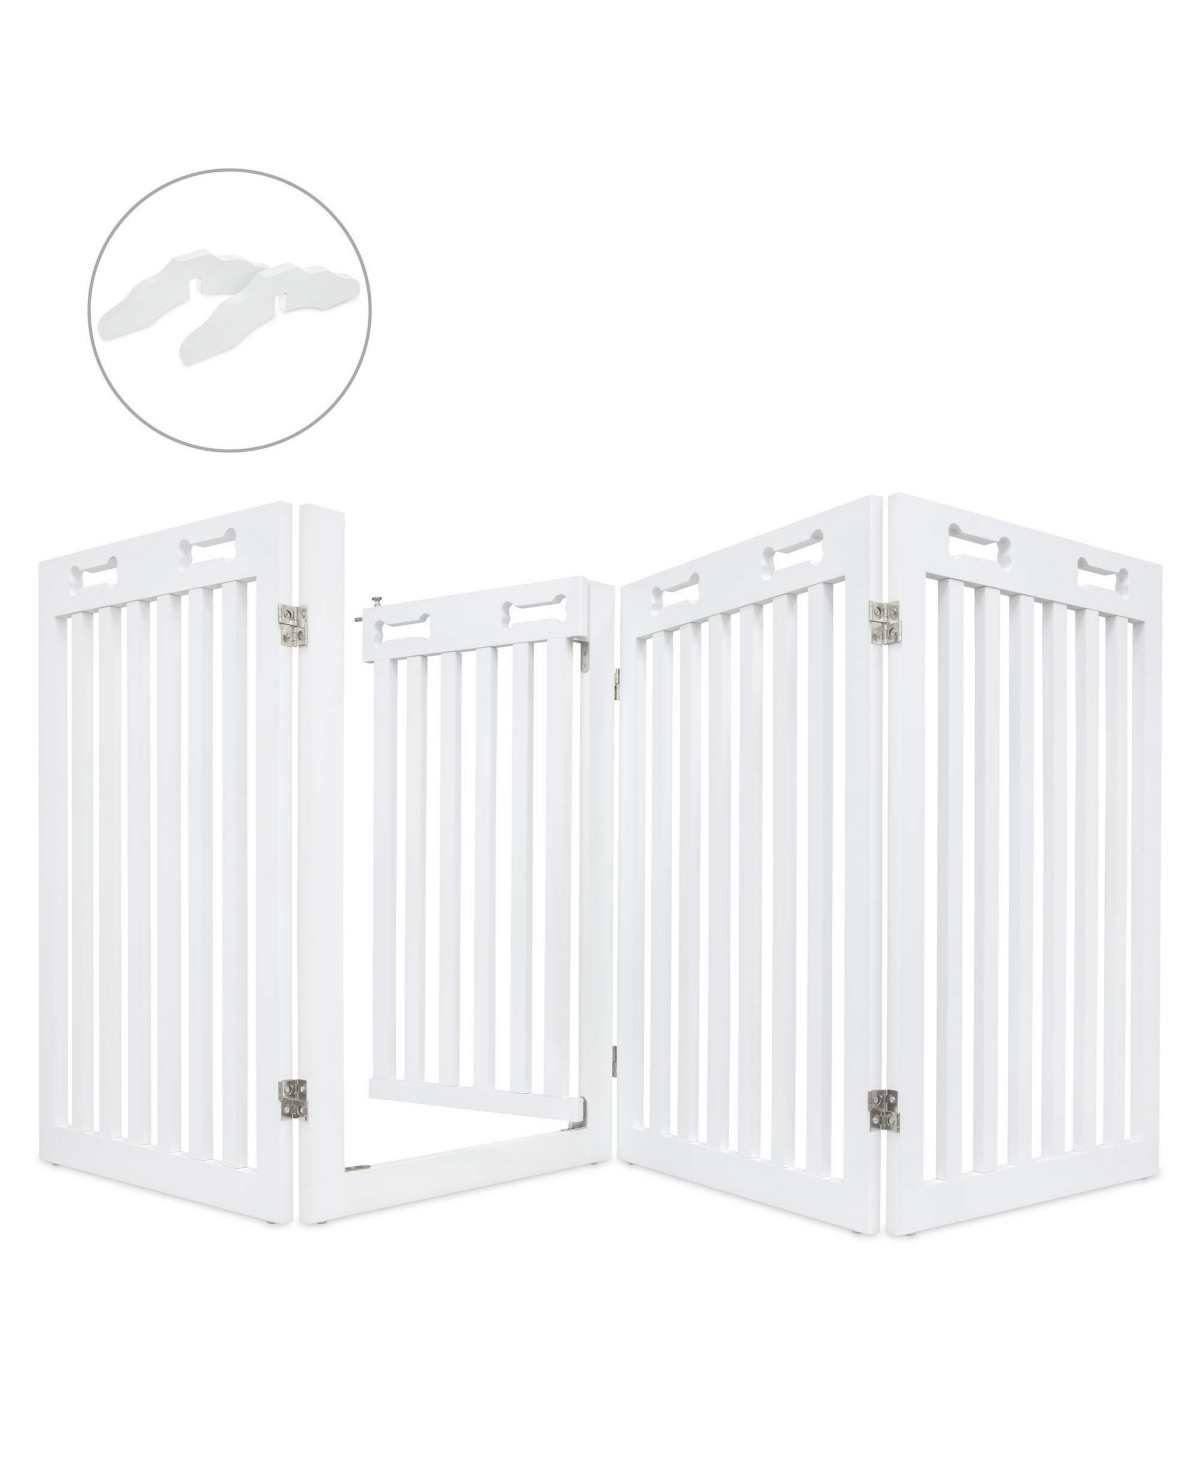 4-Panel Freestanding Dog Gate, Retractable Pet Gate W/Door - White